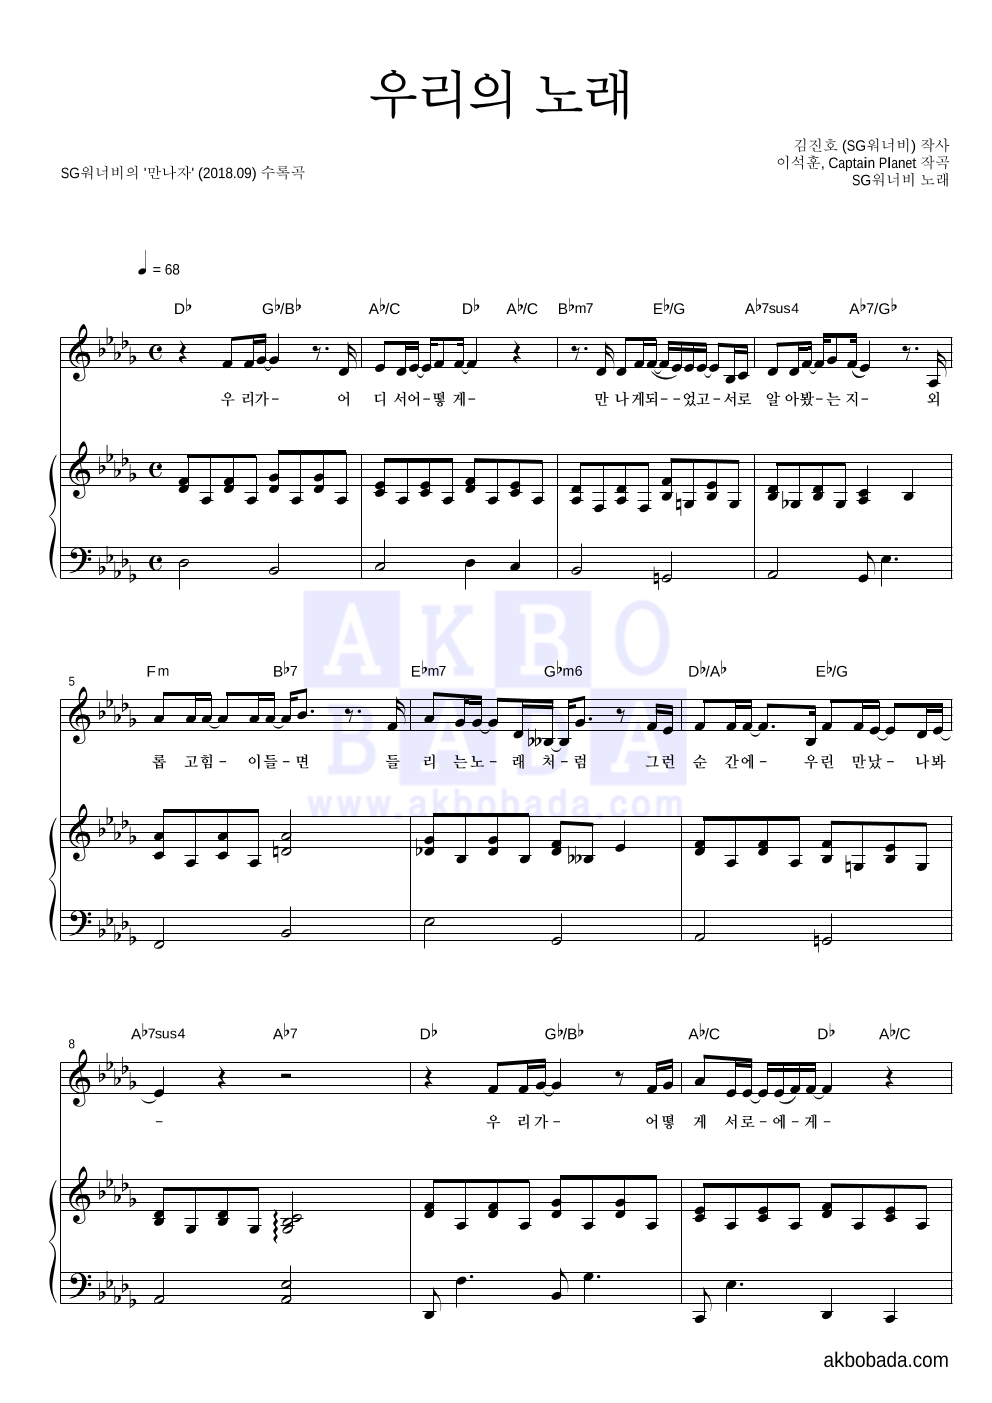 SG워너비 - 우리의 노래 피아노 3단 악보 